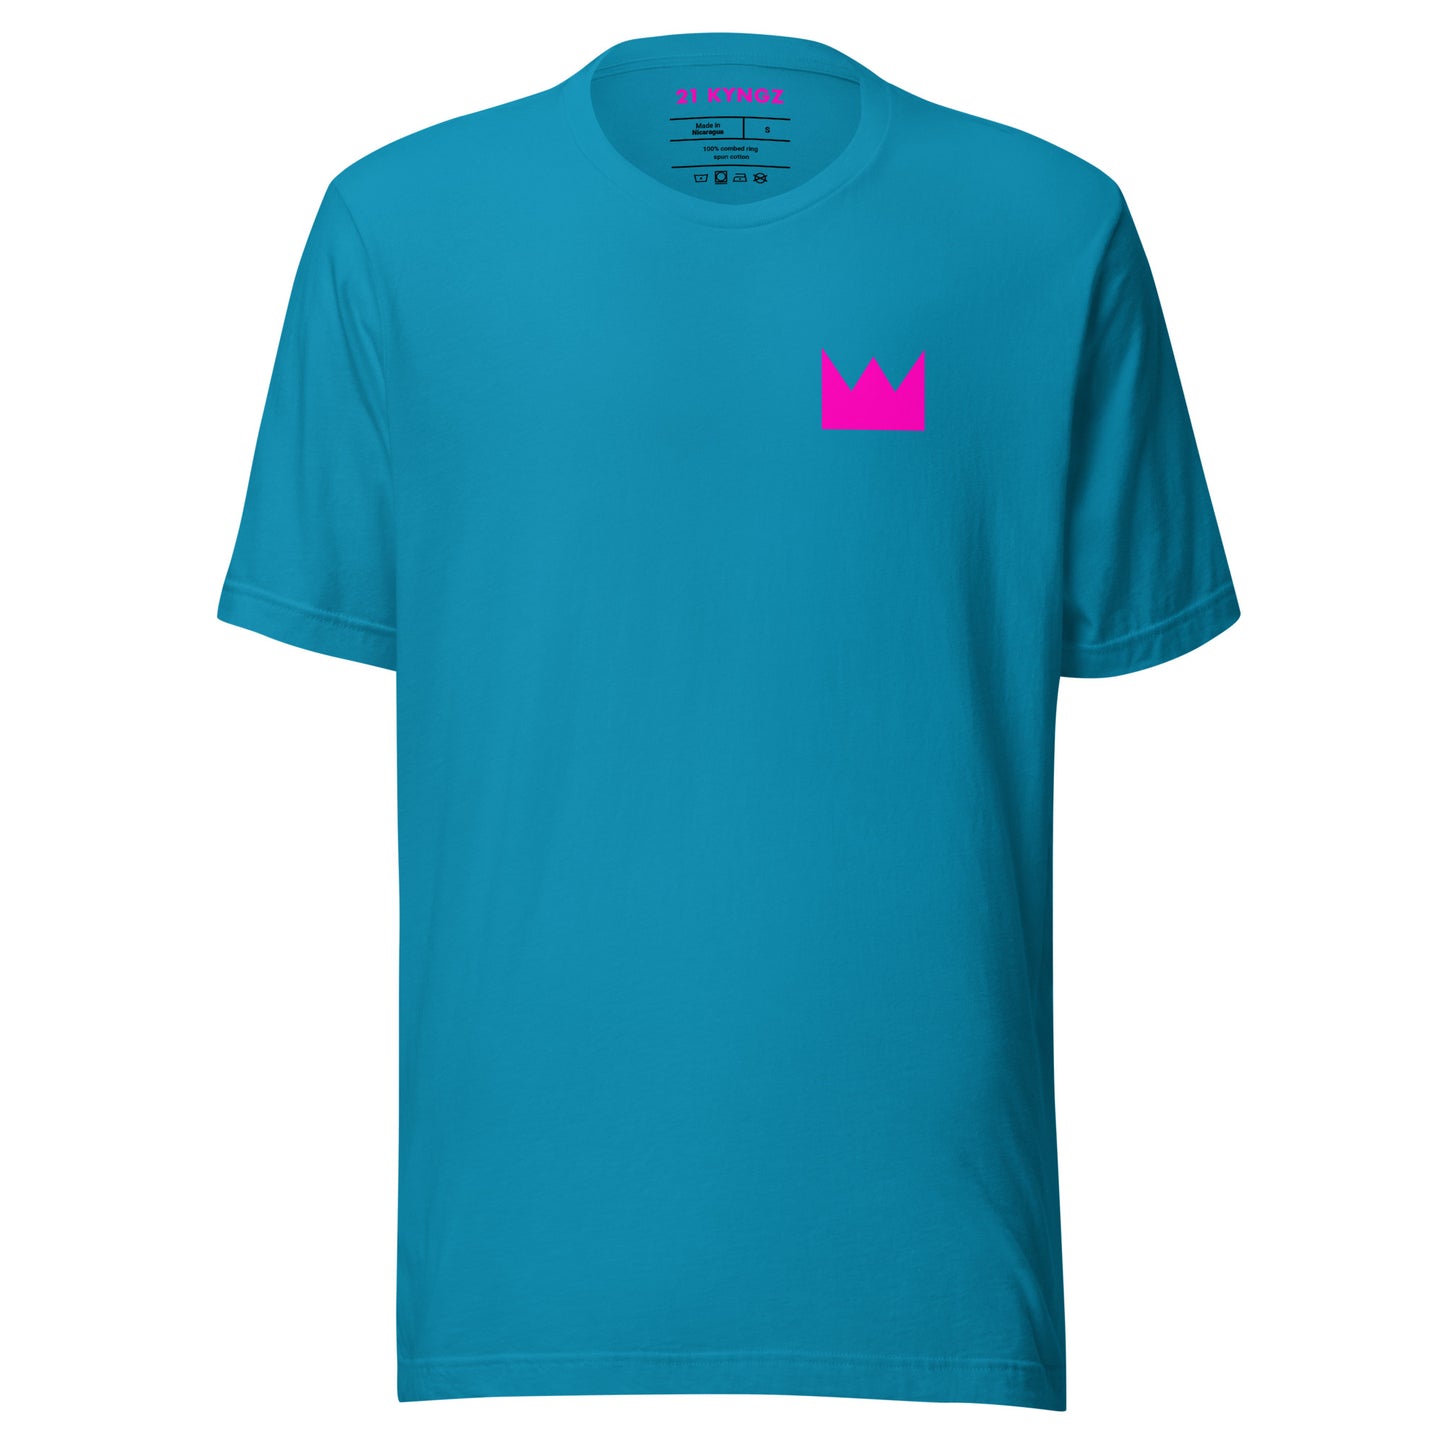 21 KYNGZ Crown (Pi) Unisex T-shirt